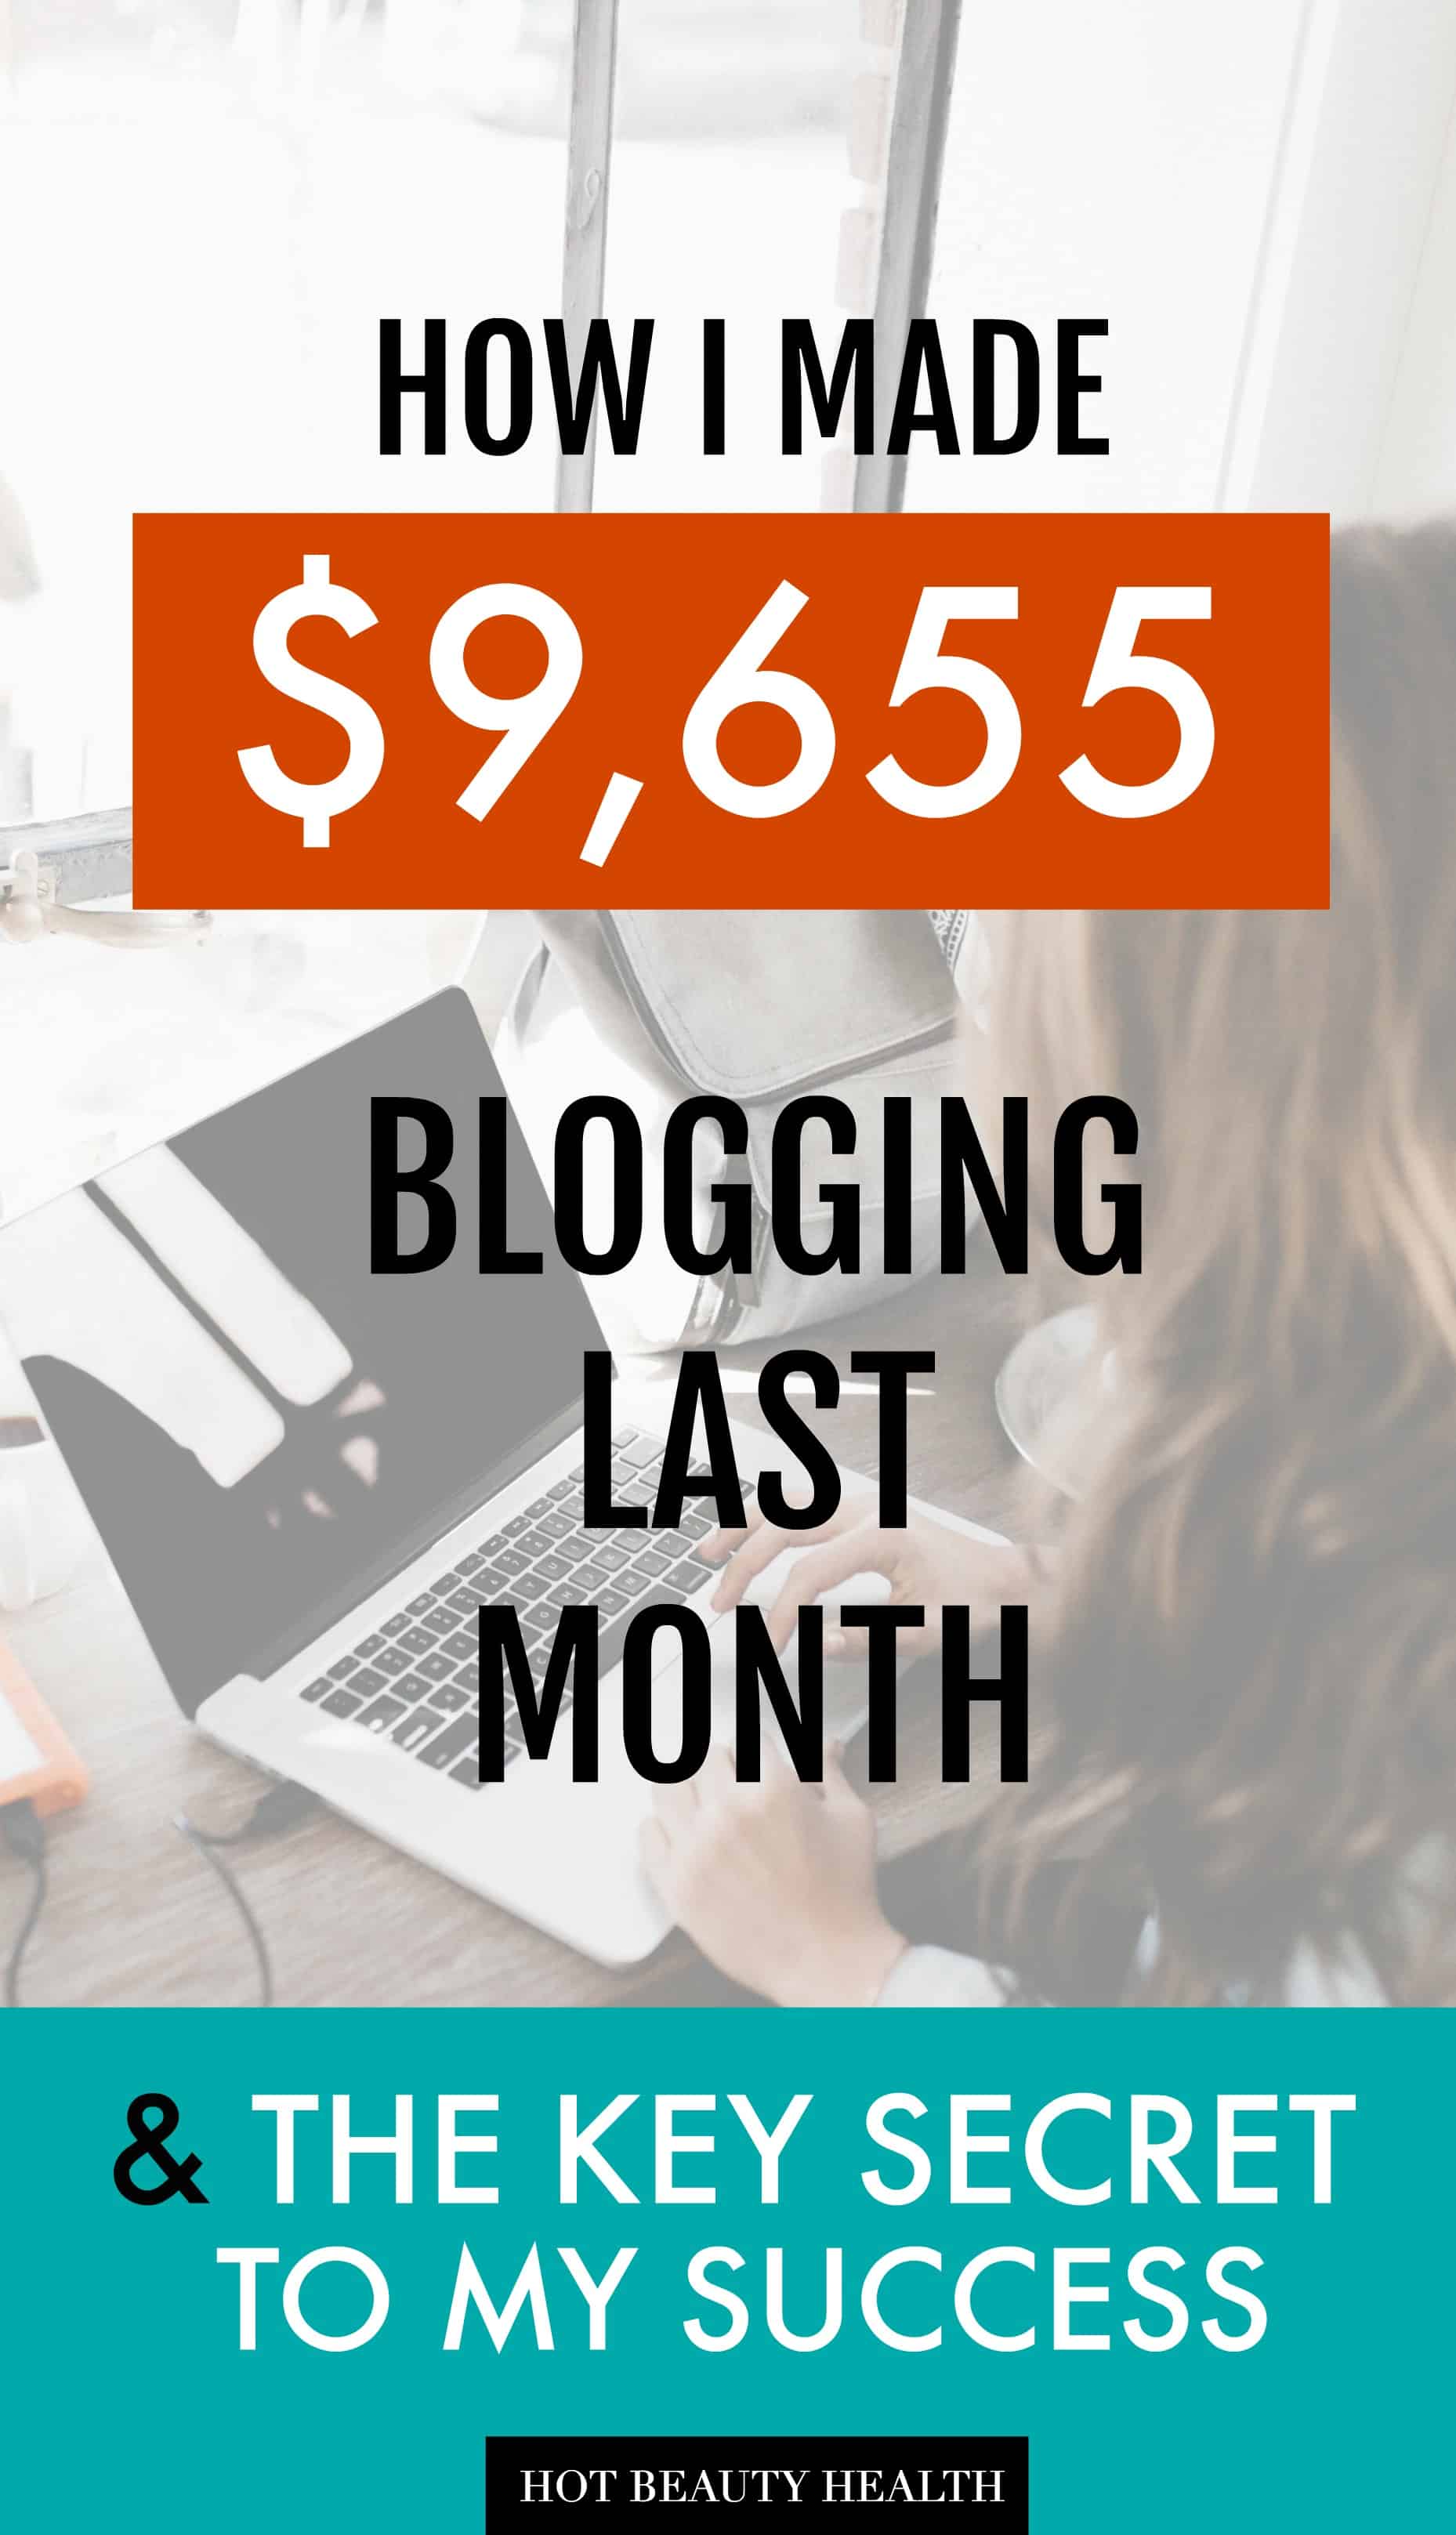 September 2018 Blog Income Report: $9655.31